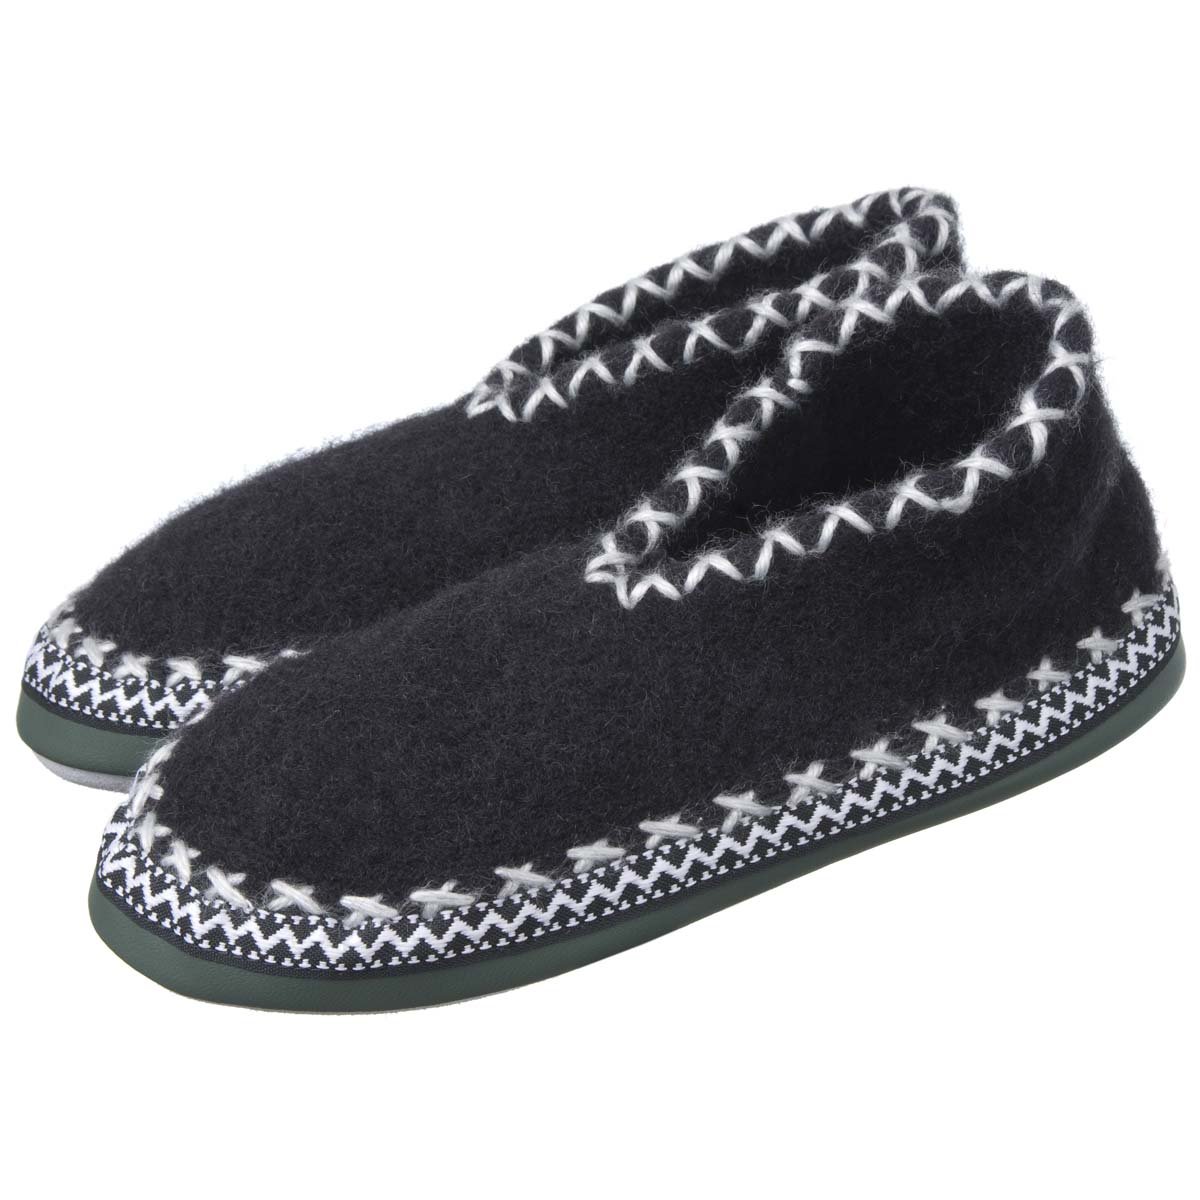 best boiled wool slippers